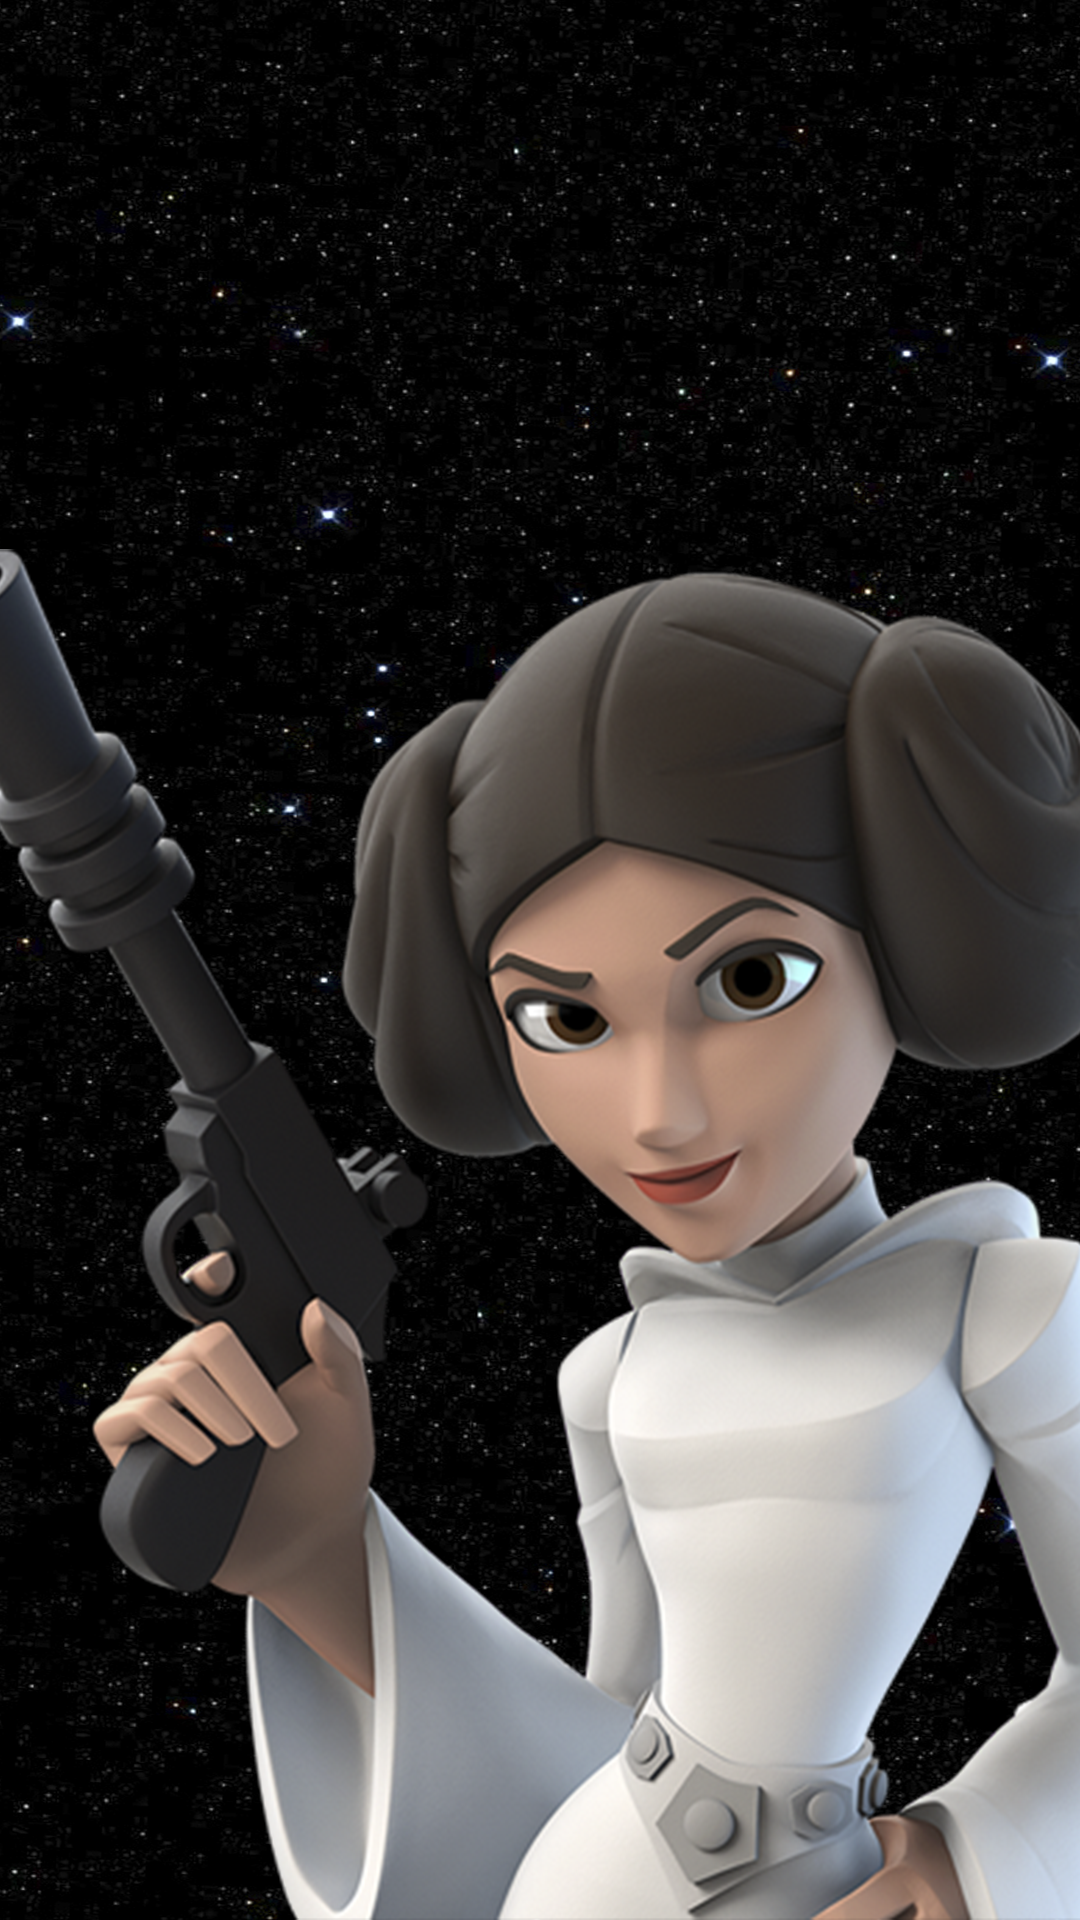 Princess Leia Wallpaper Disney Infinity 3.0 Disney Infinity Codes ...